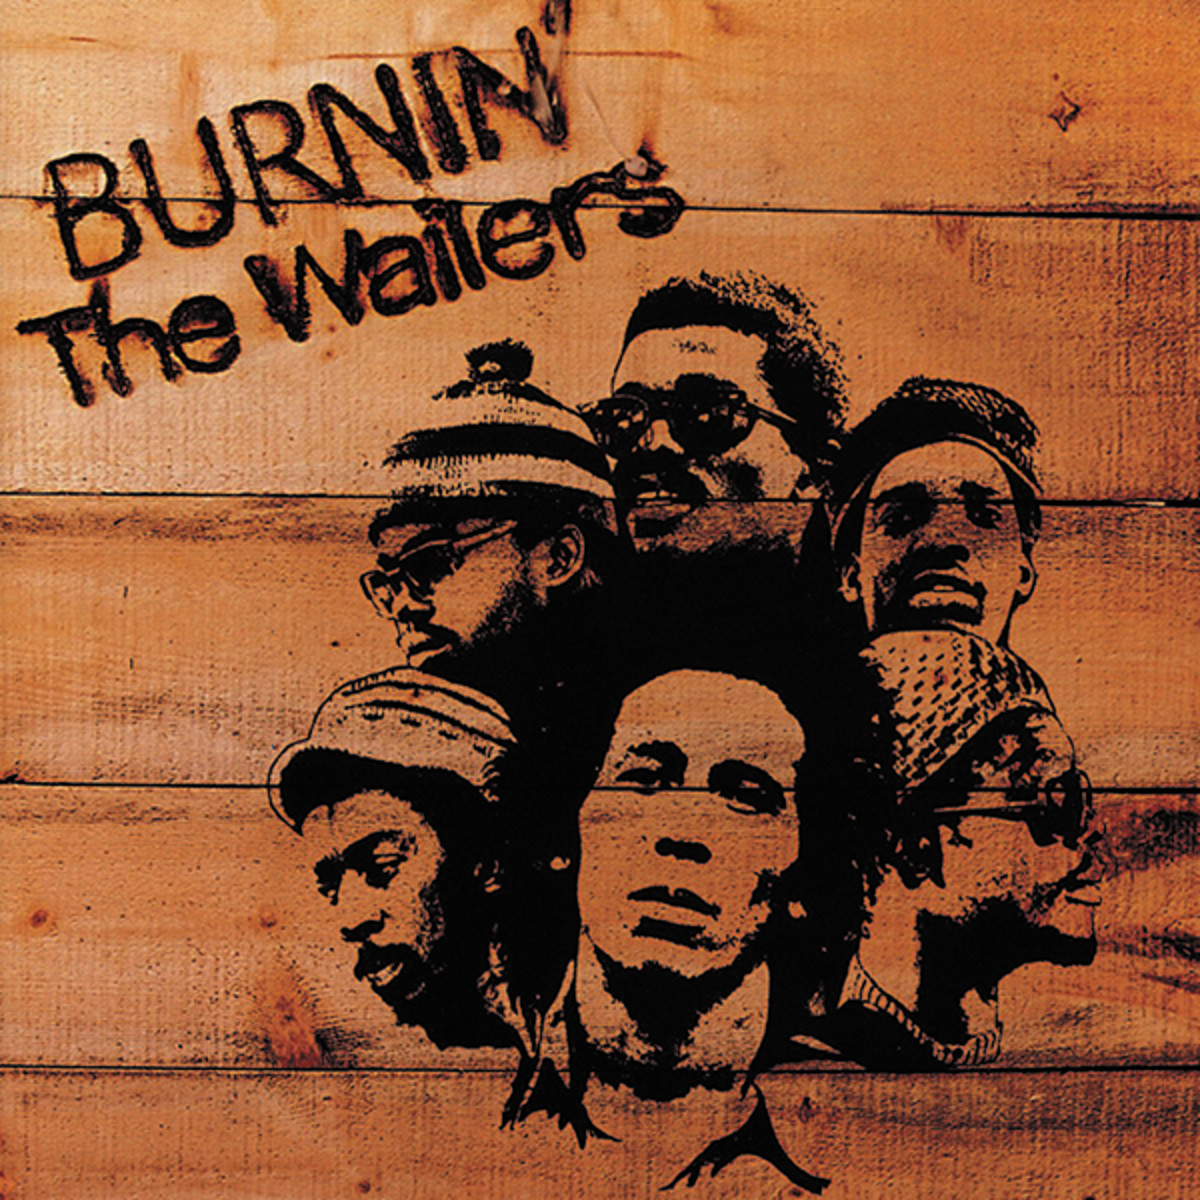 Bob Marley the Wailers_c